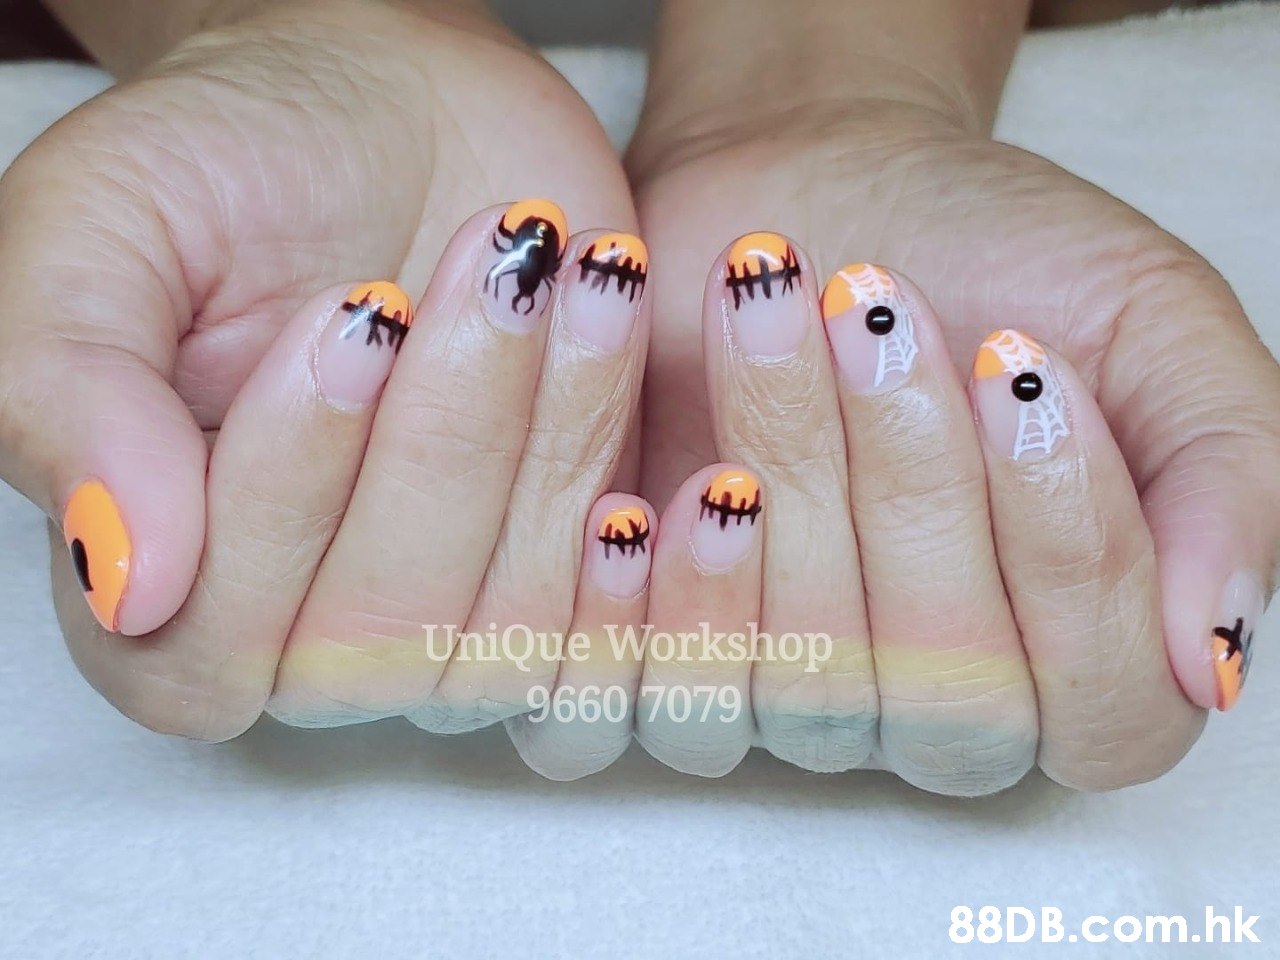 UniQue Workshop 9660 7079 .hk  Nail,Finger,Nail care,Manicure,Nail polish